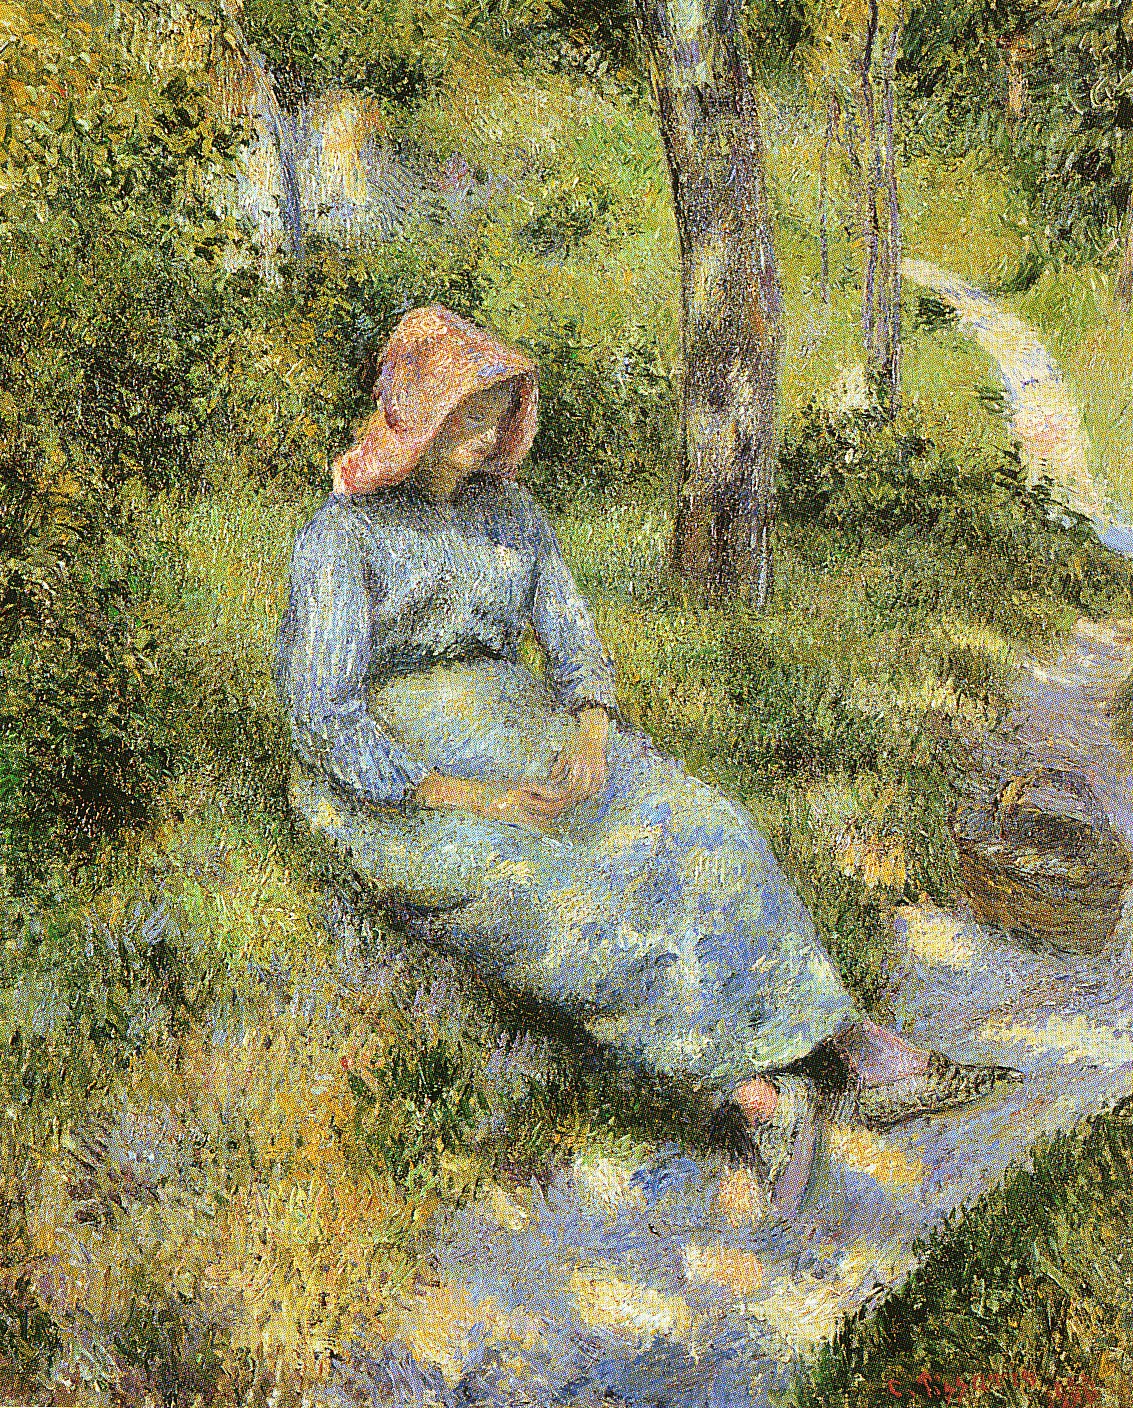 Camille+Pissarro-1830-1903 (318).jpg